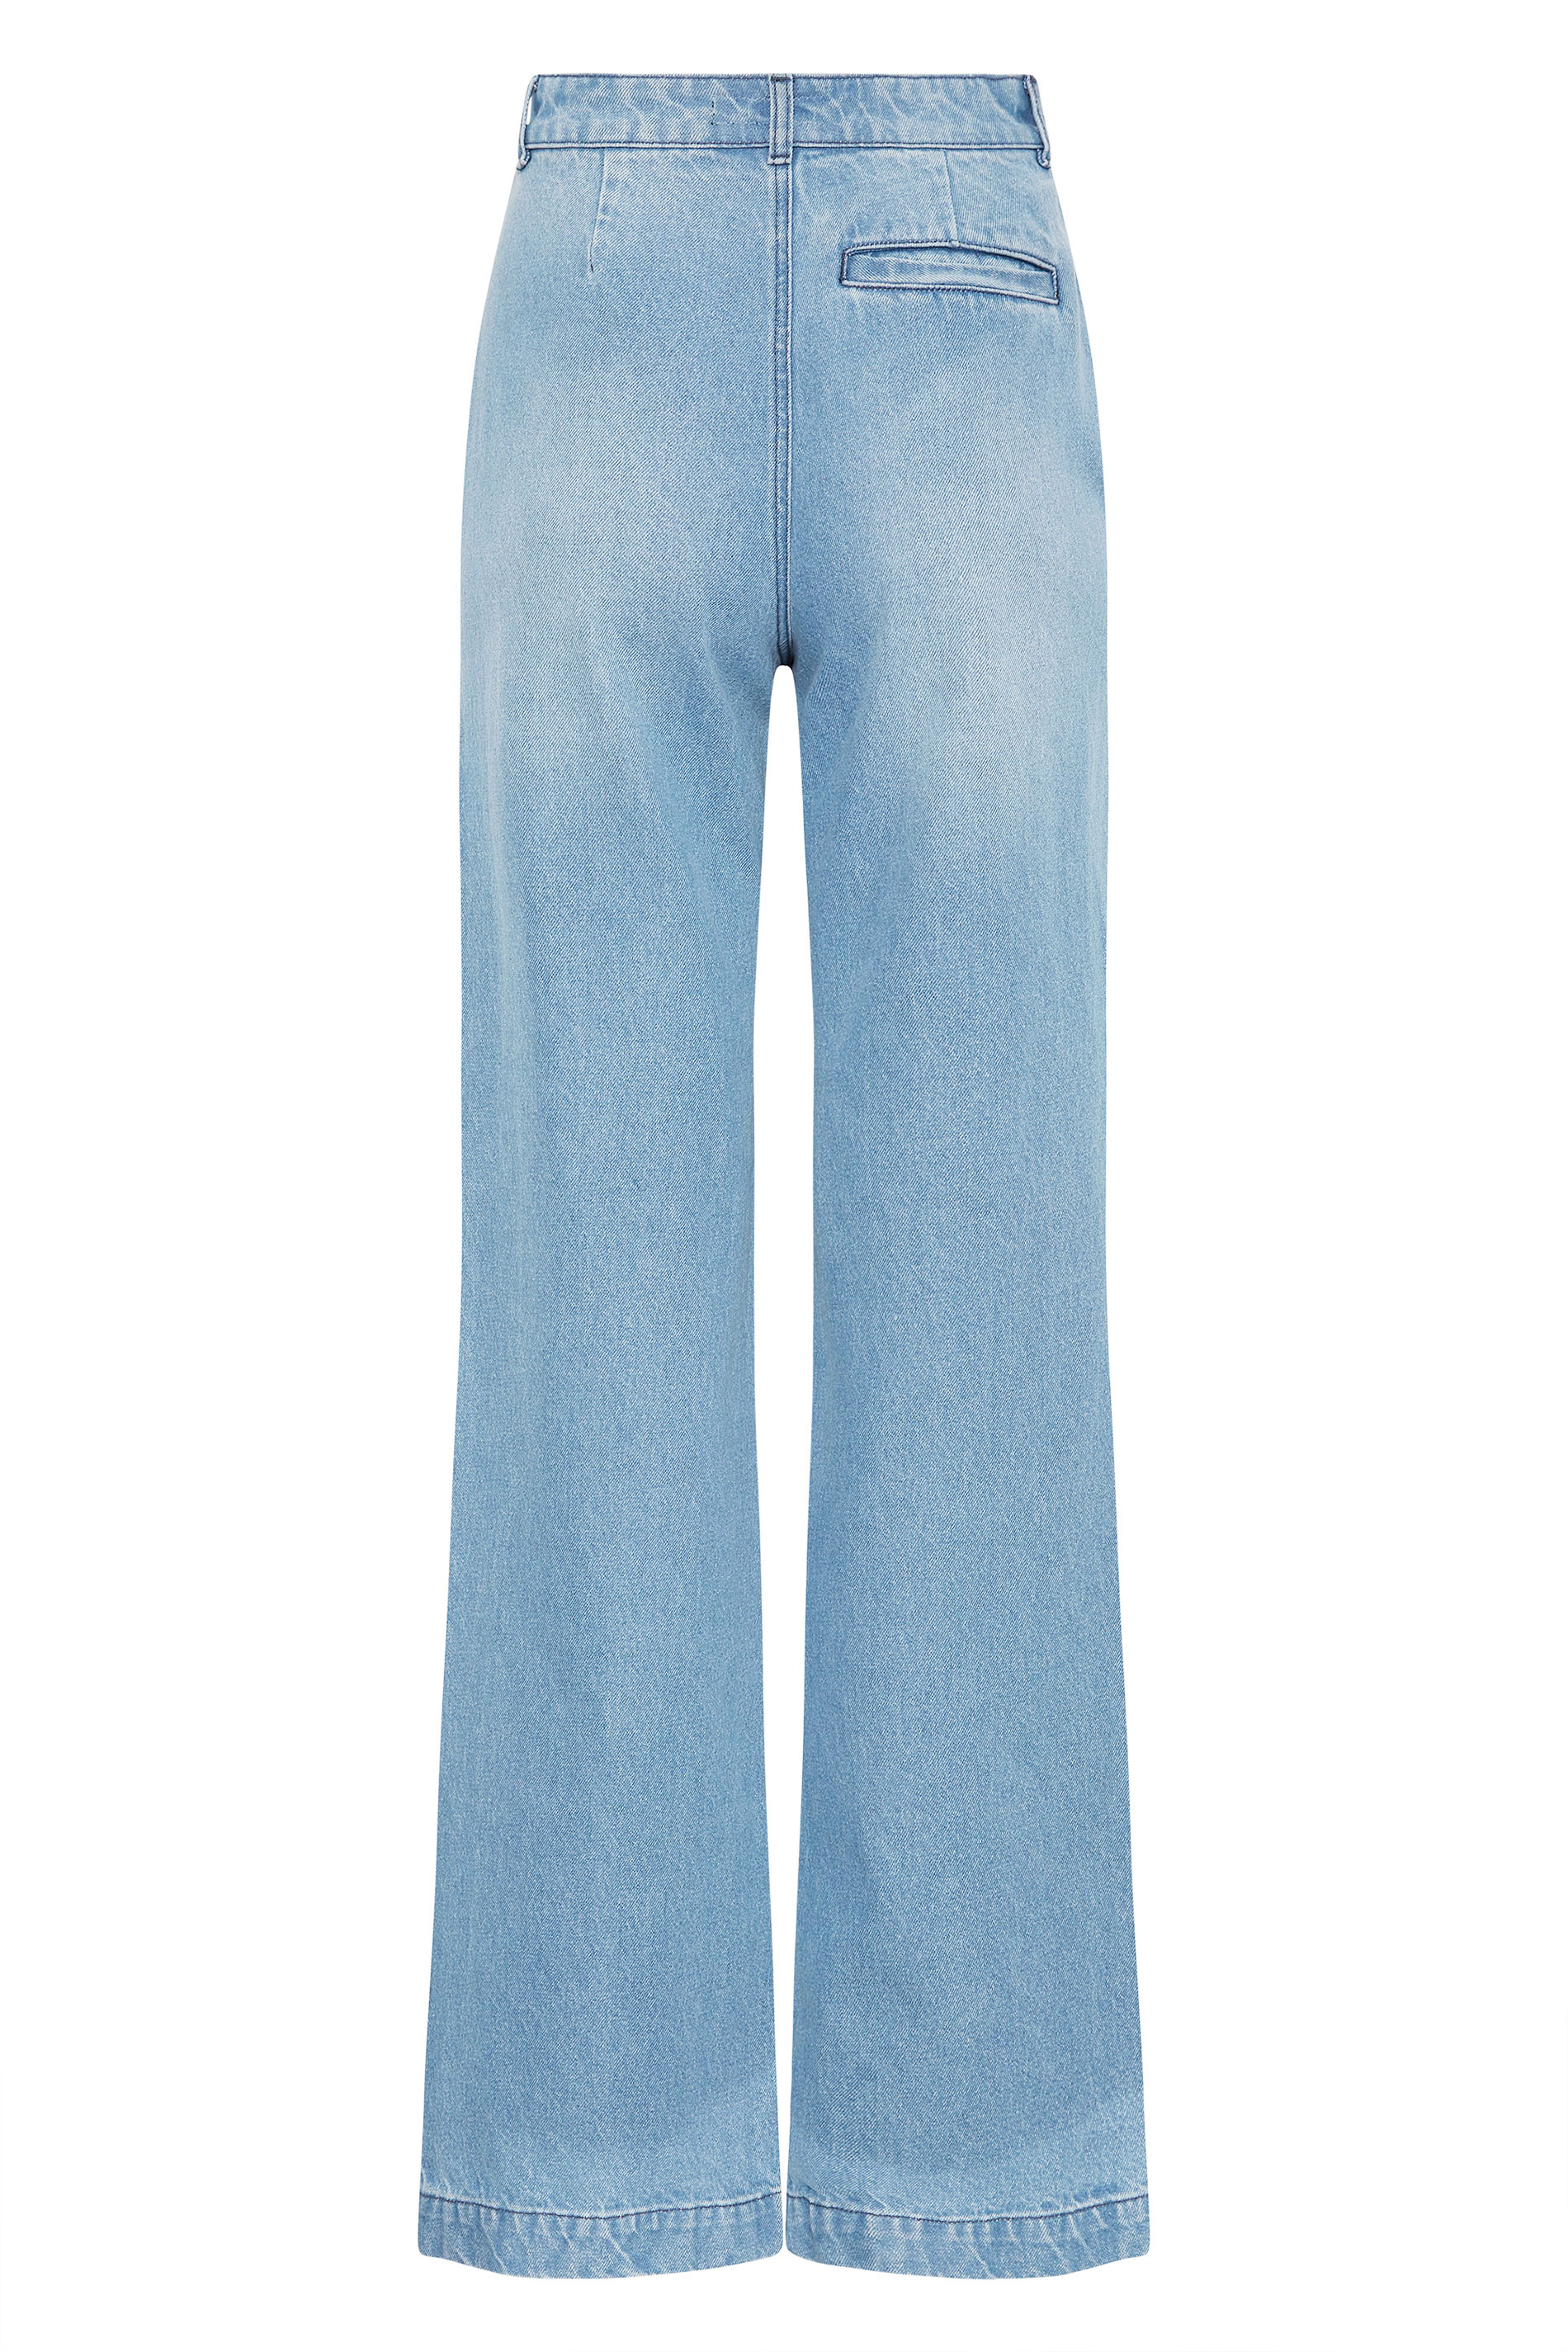 J Brand womens size 32 tall x 36 length straight leg jeans blue regular  casual b - $53 - From Bea